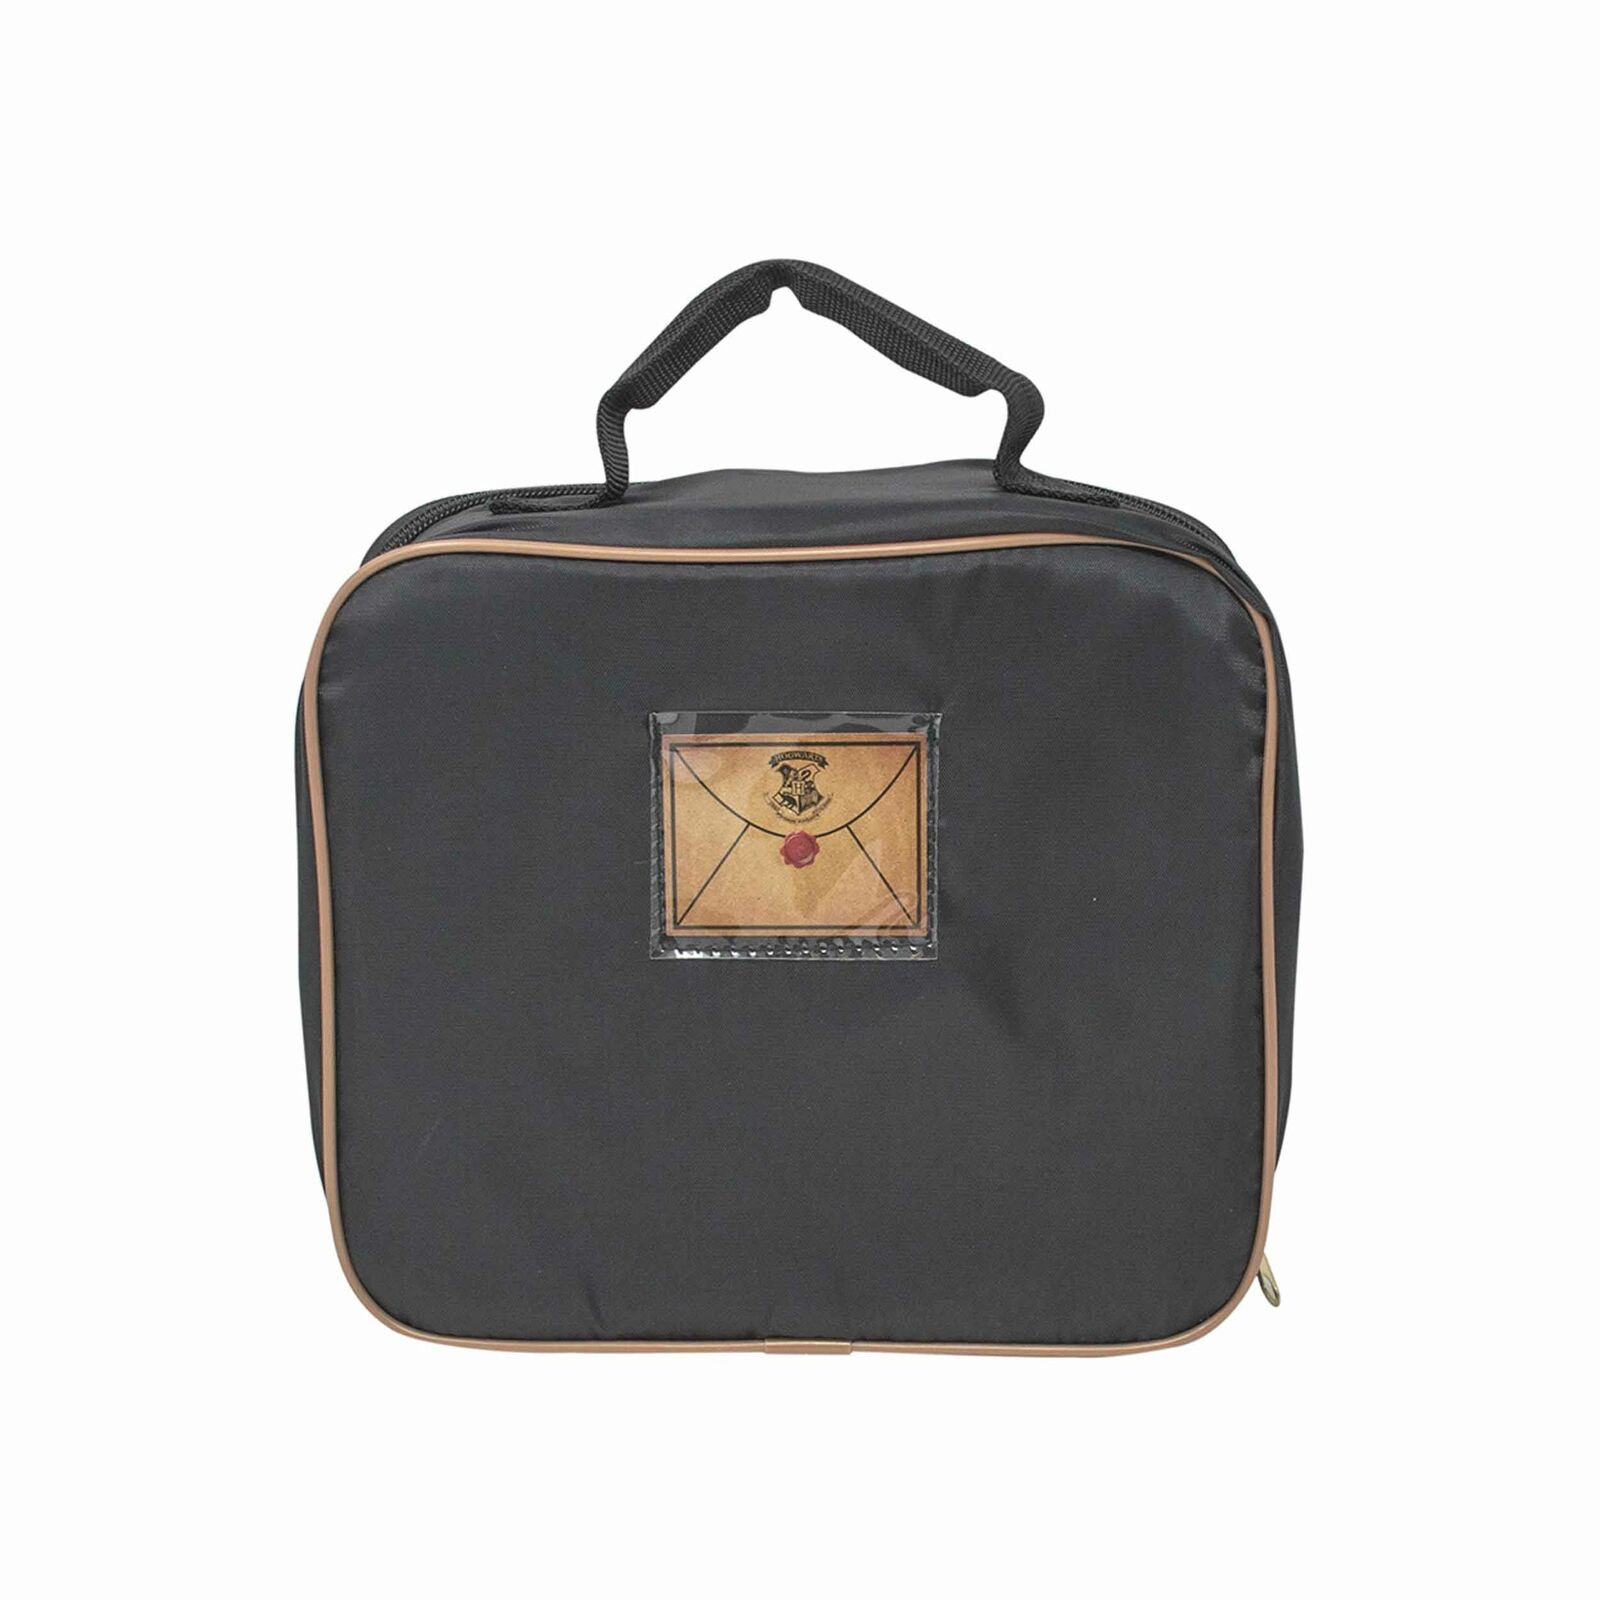 Harry Potter Black Lunch Box Bag